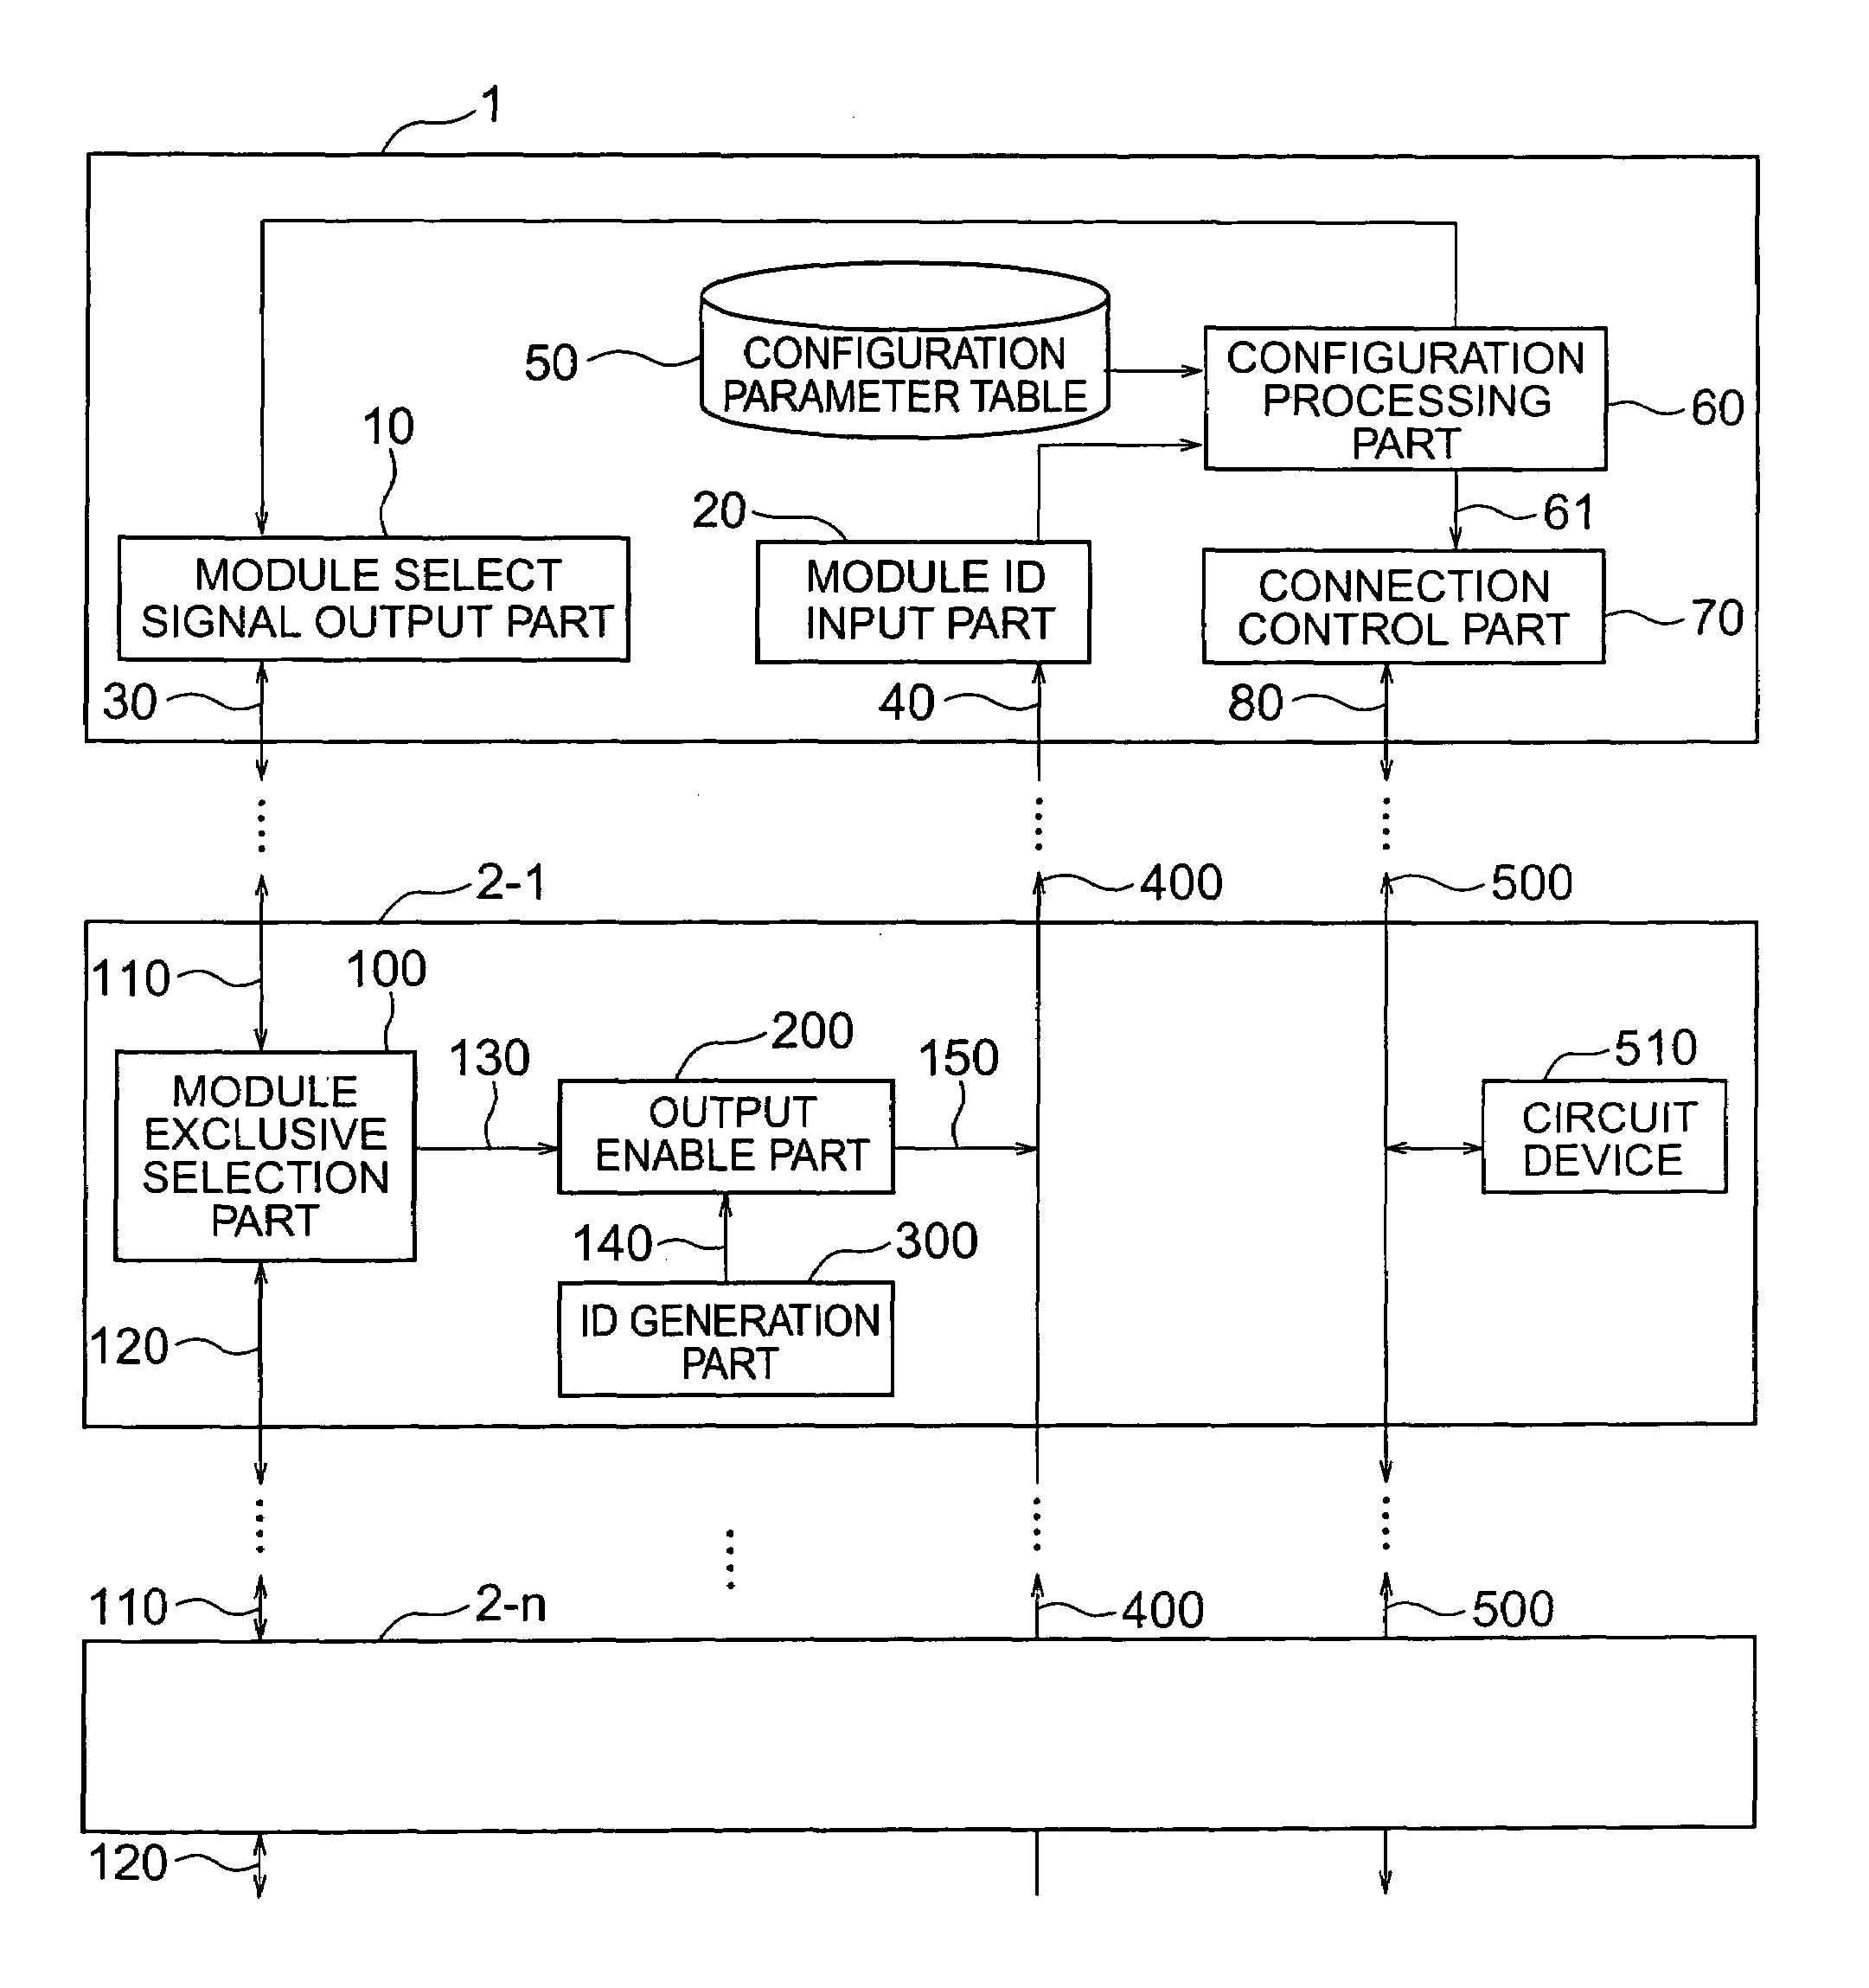 Modular computer system and I/O module